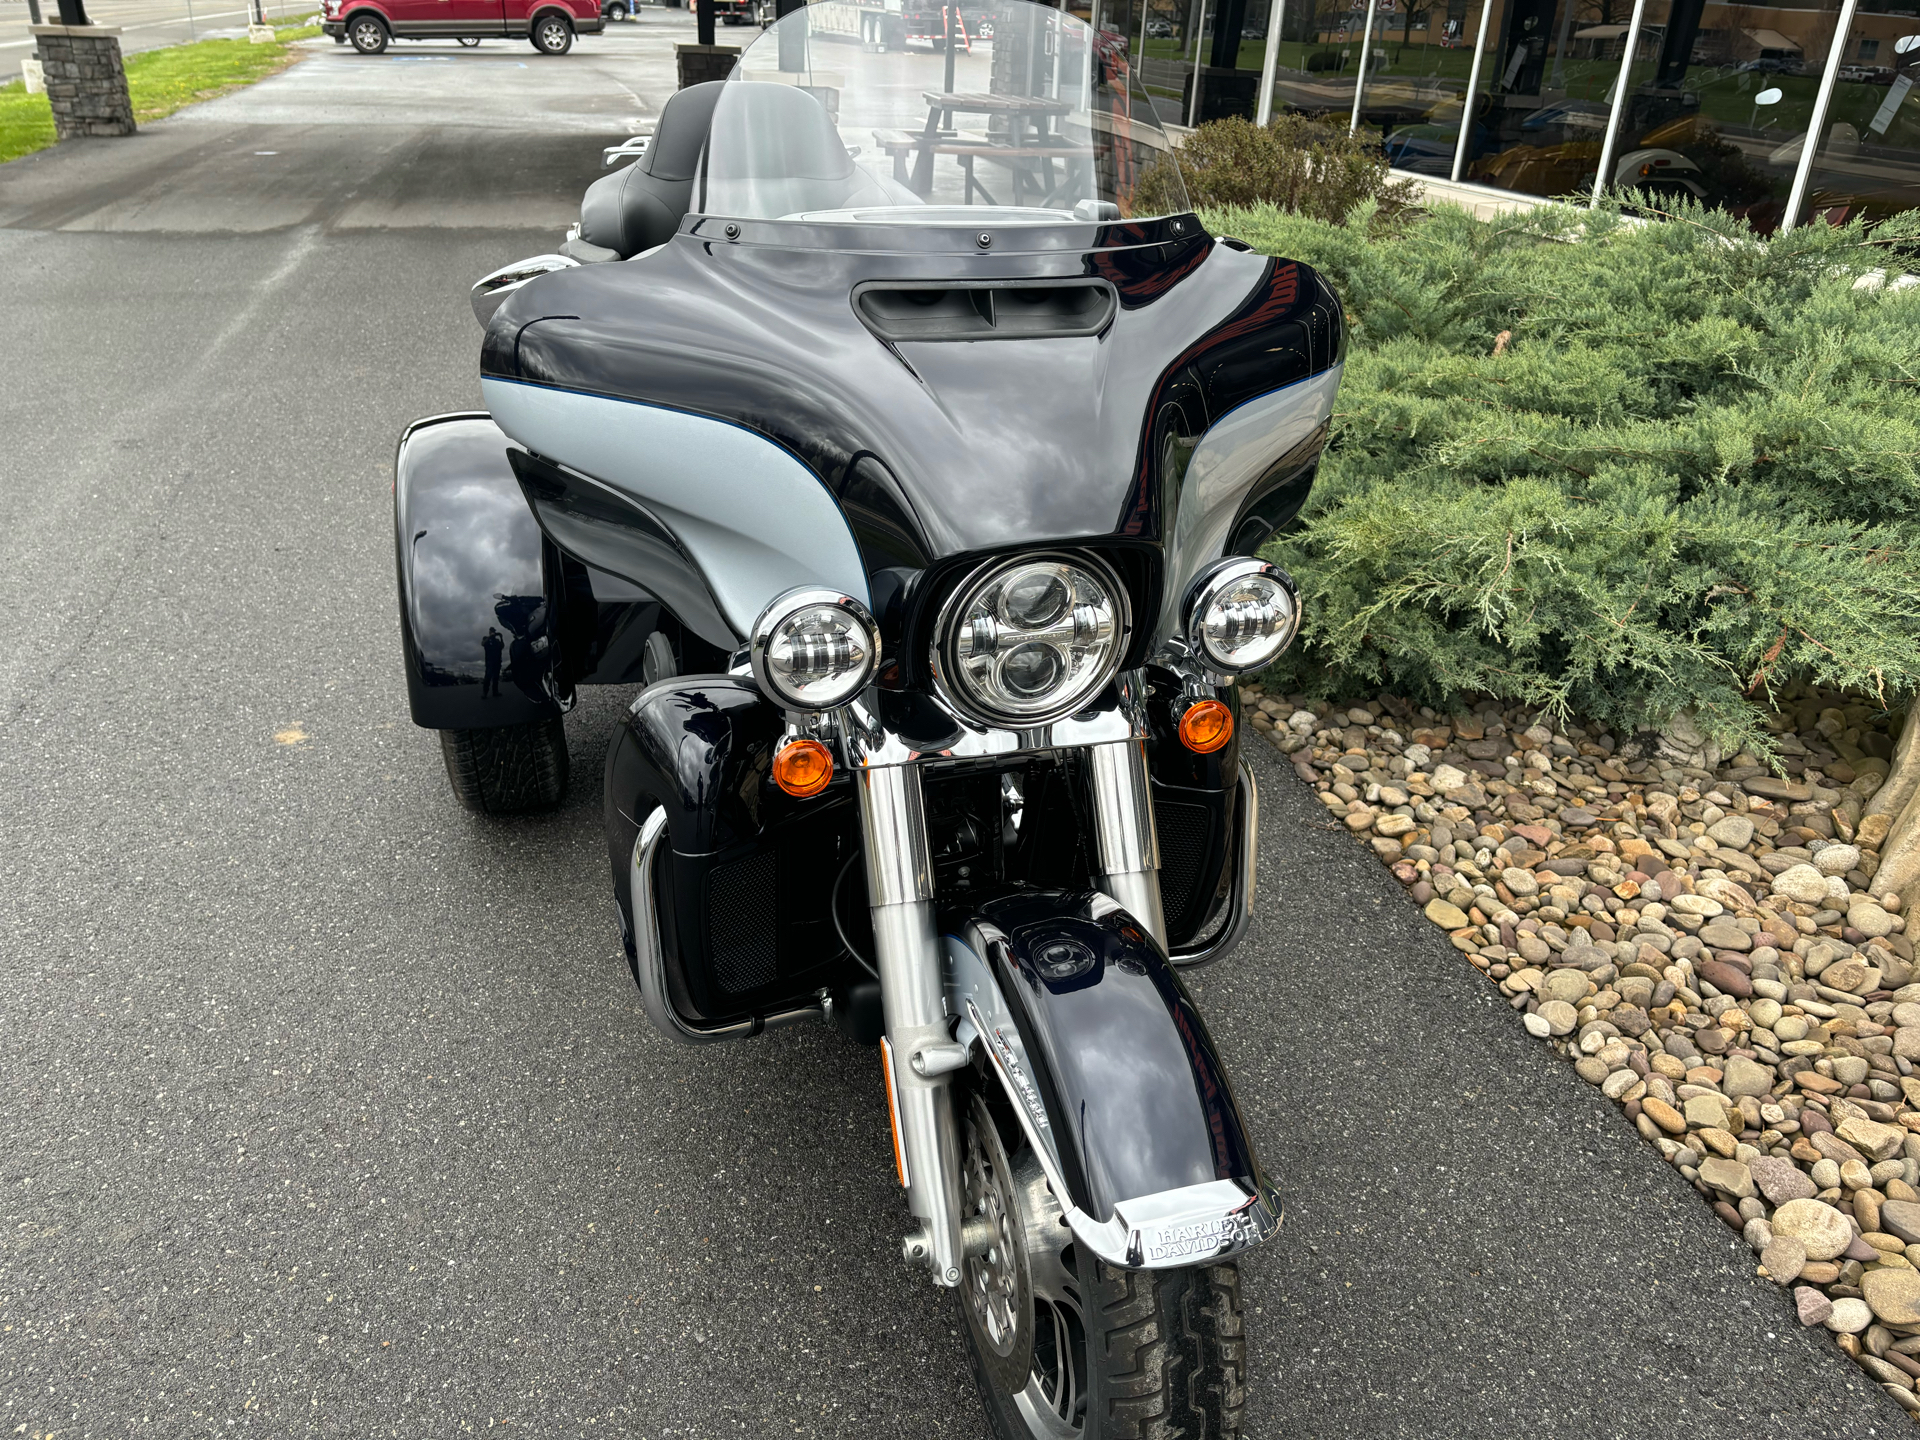 2020 Harley-Davidson Tri Glide® Ultra in Duncansville, Pennsylvania - Photo 3